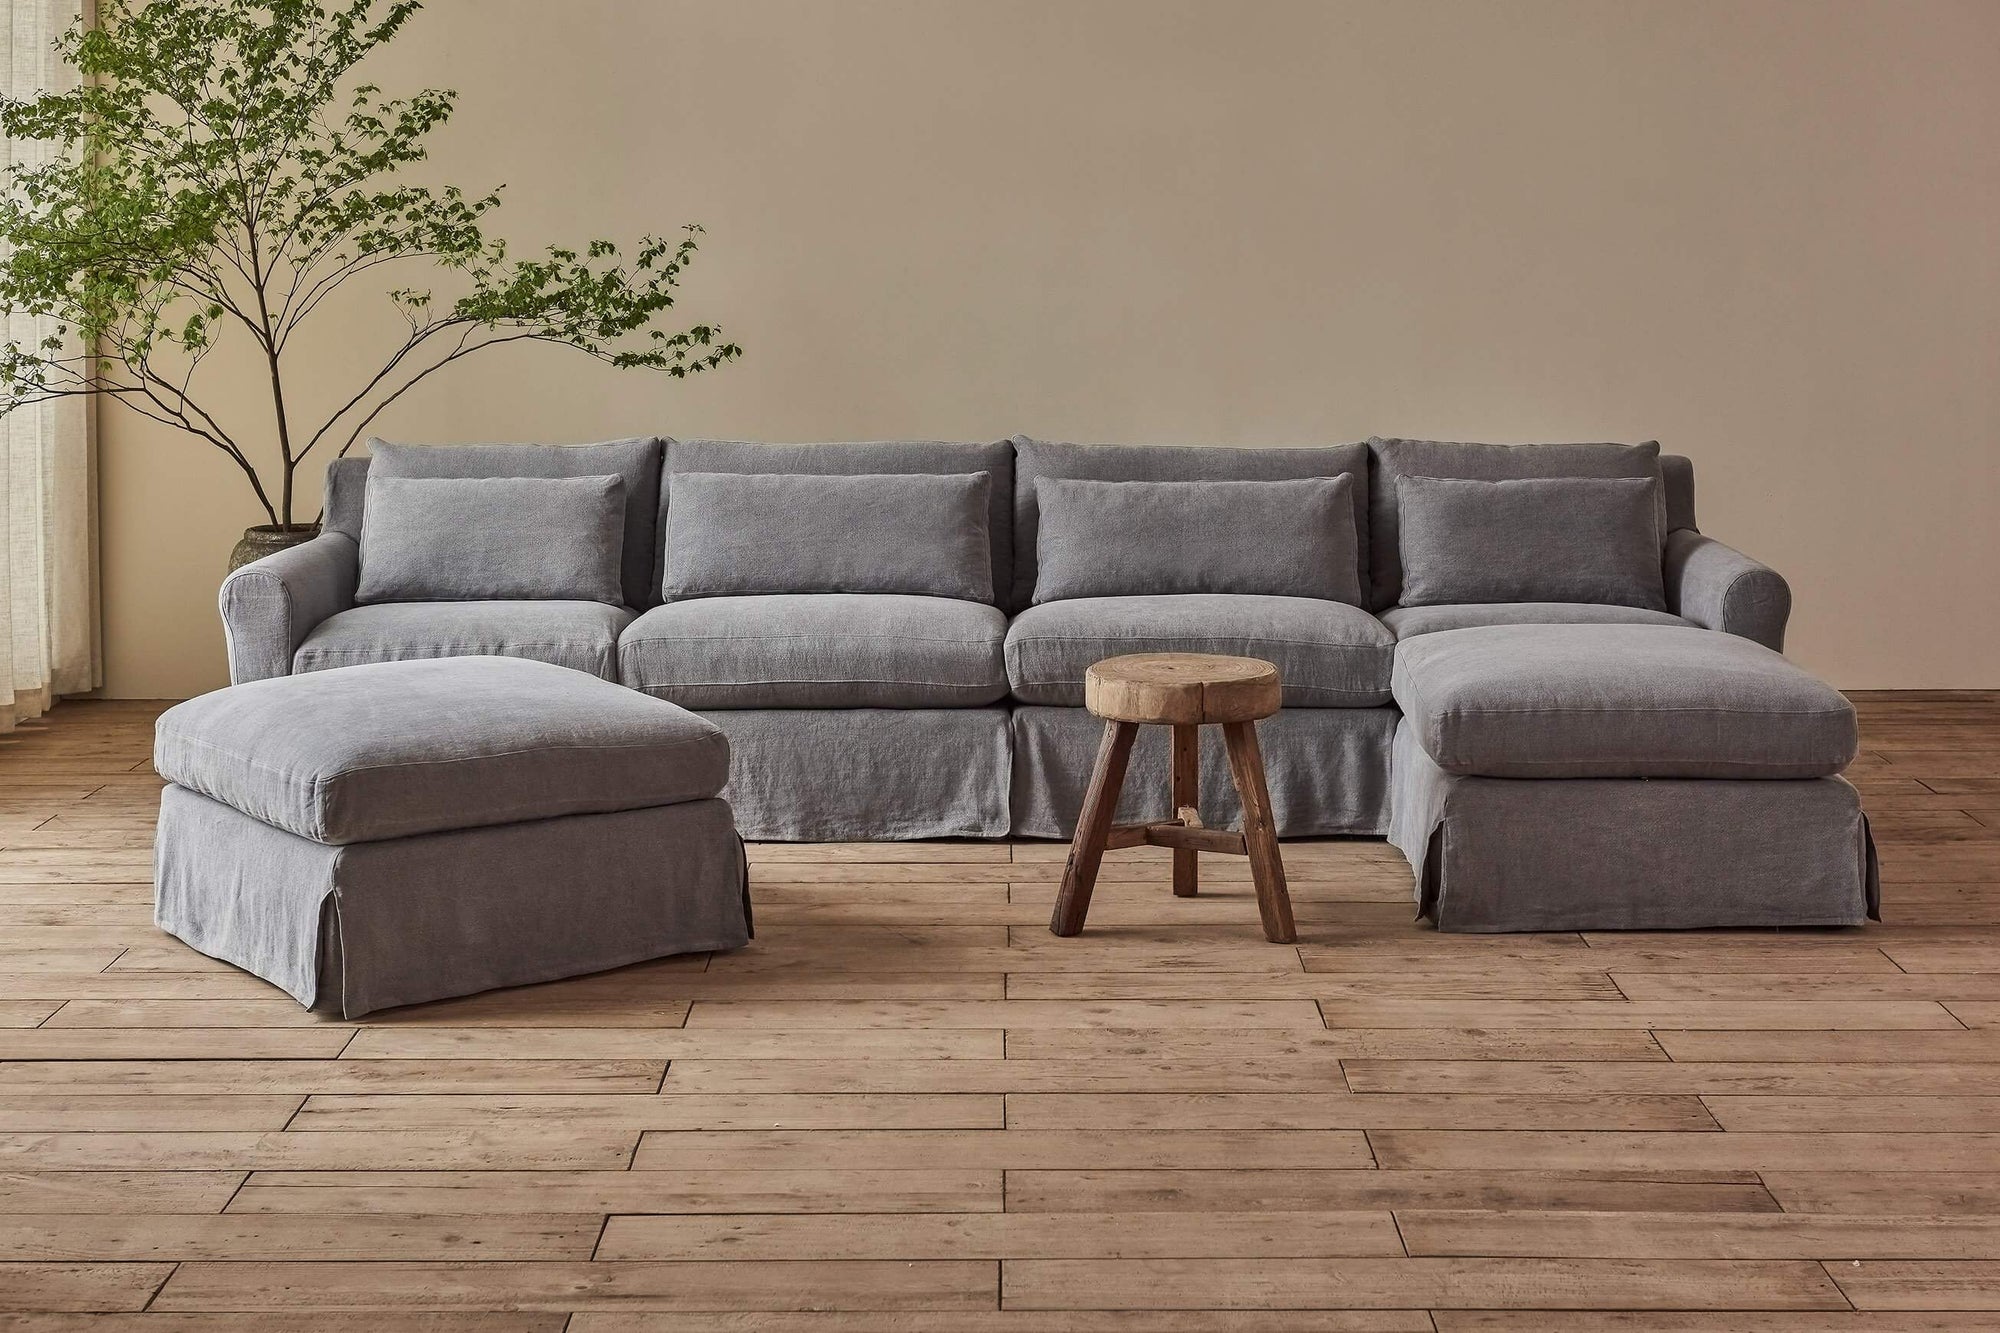 Elias U-Shape Sectional Sofa in Ink Cap, a medium cool grey Light Weight Linen